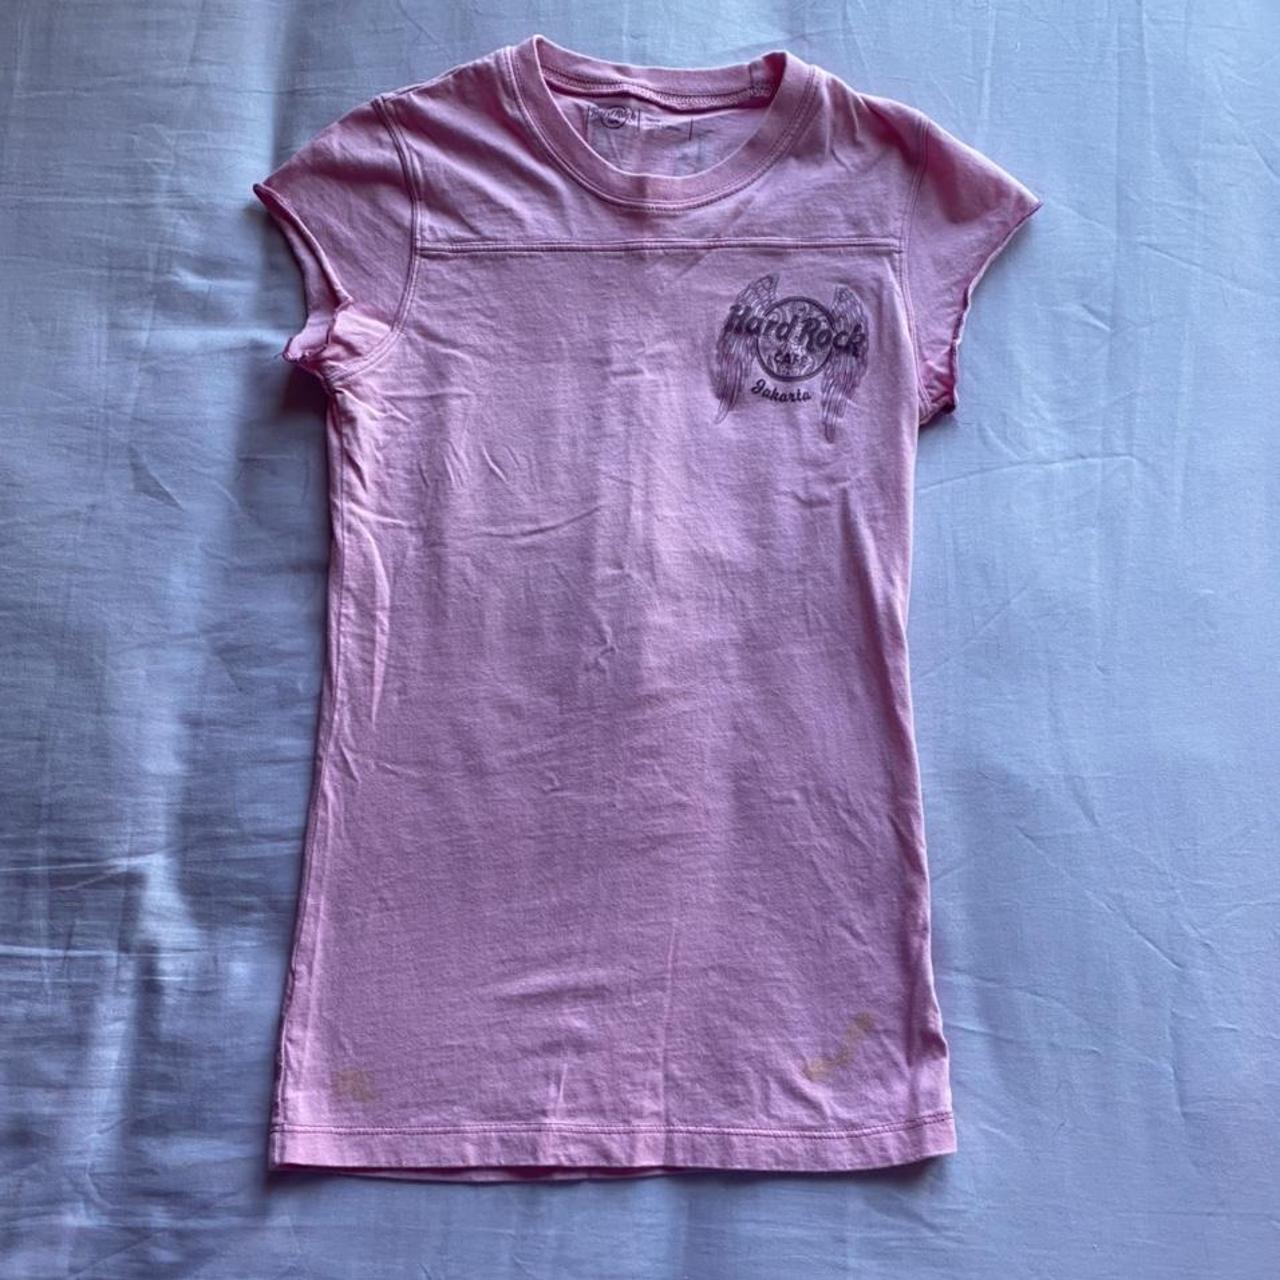 Hard Rock Cafe Women's Pink T-shirt (2)